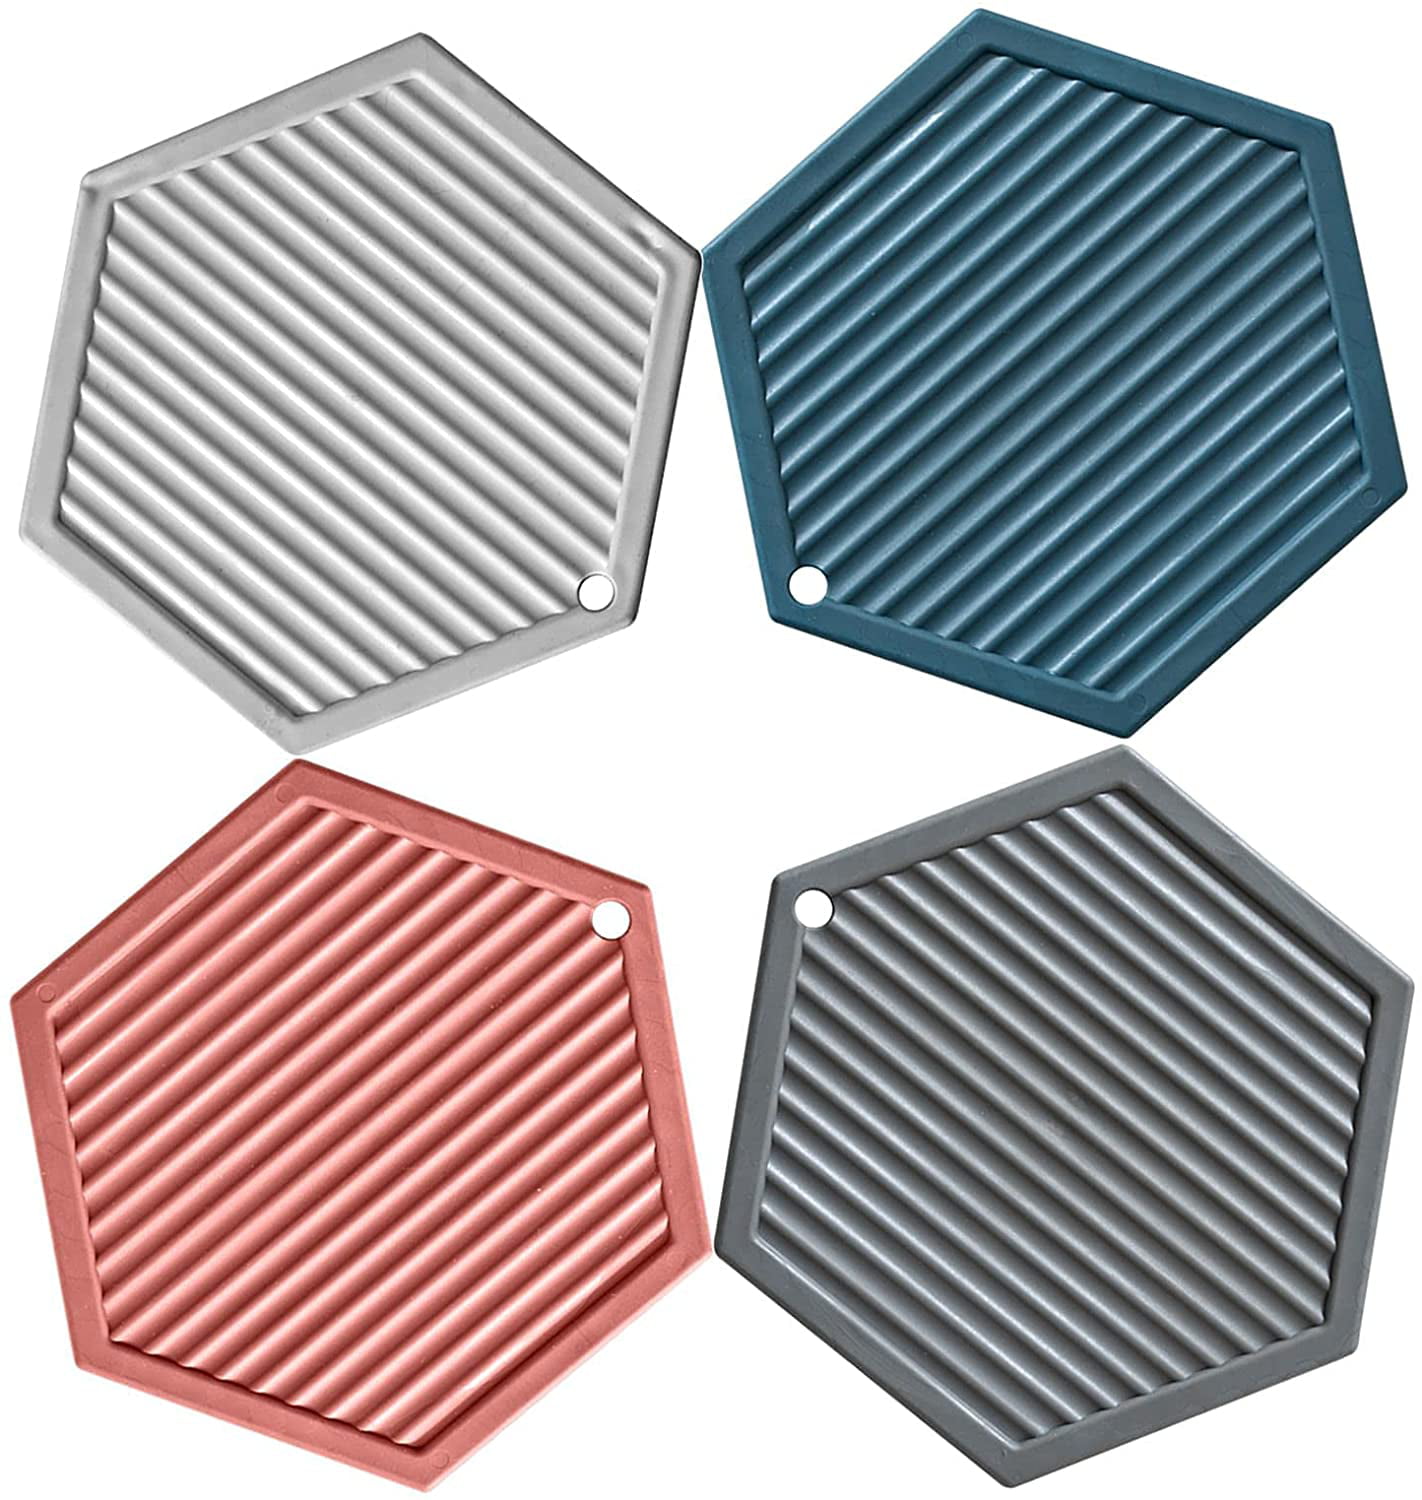 Pack of 4 Luxury Hexagonal Stone Coasters Set Light Grey Drink Mug Table Mats